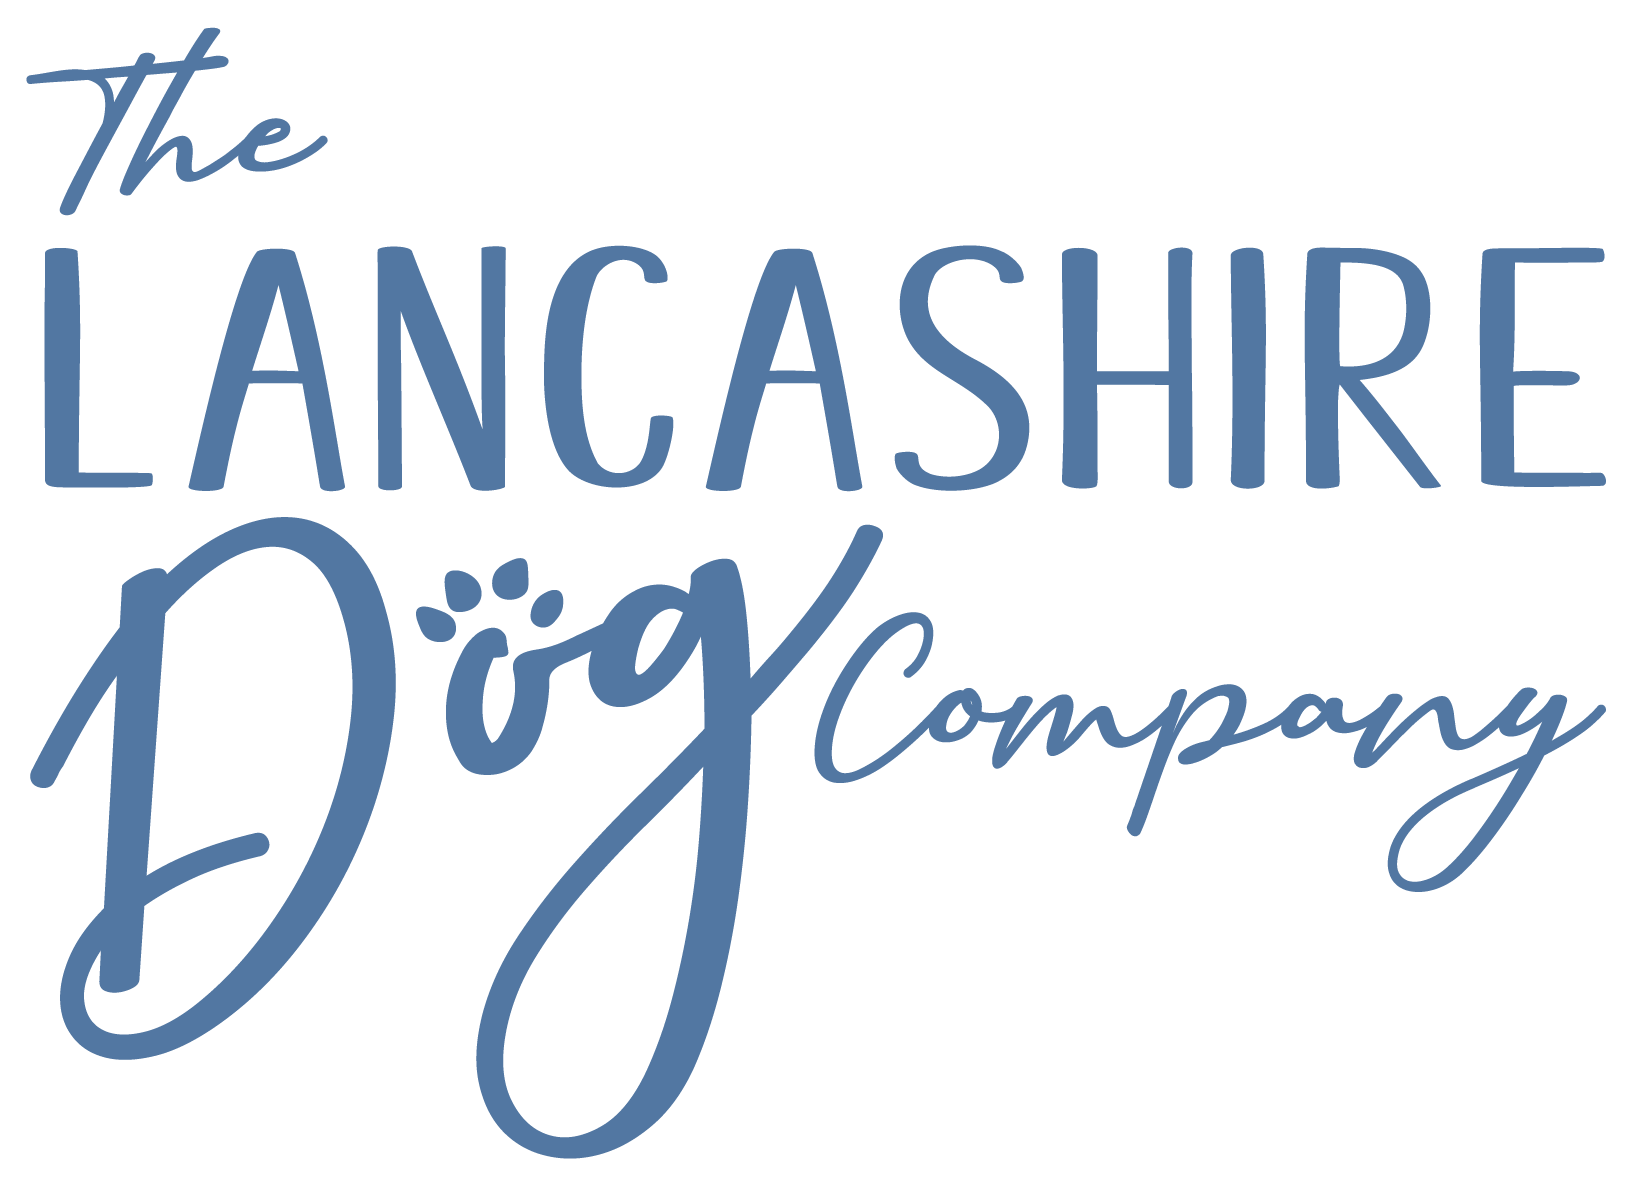 The Lancashire Dog Company